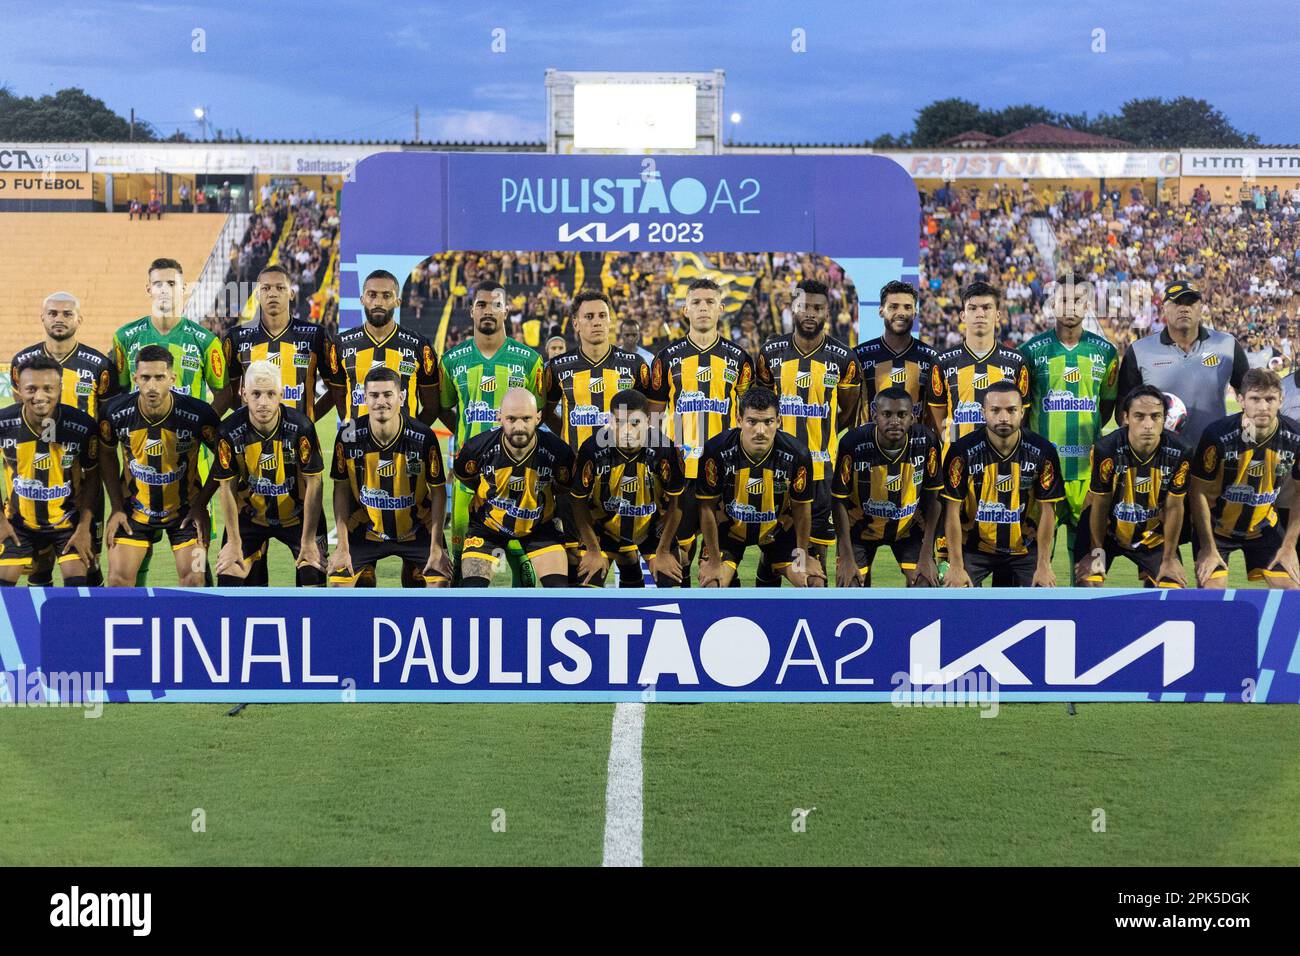 America MG vs Santos: A Clash of Football Titans